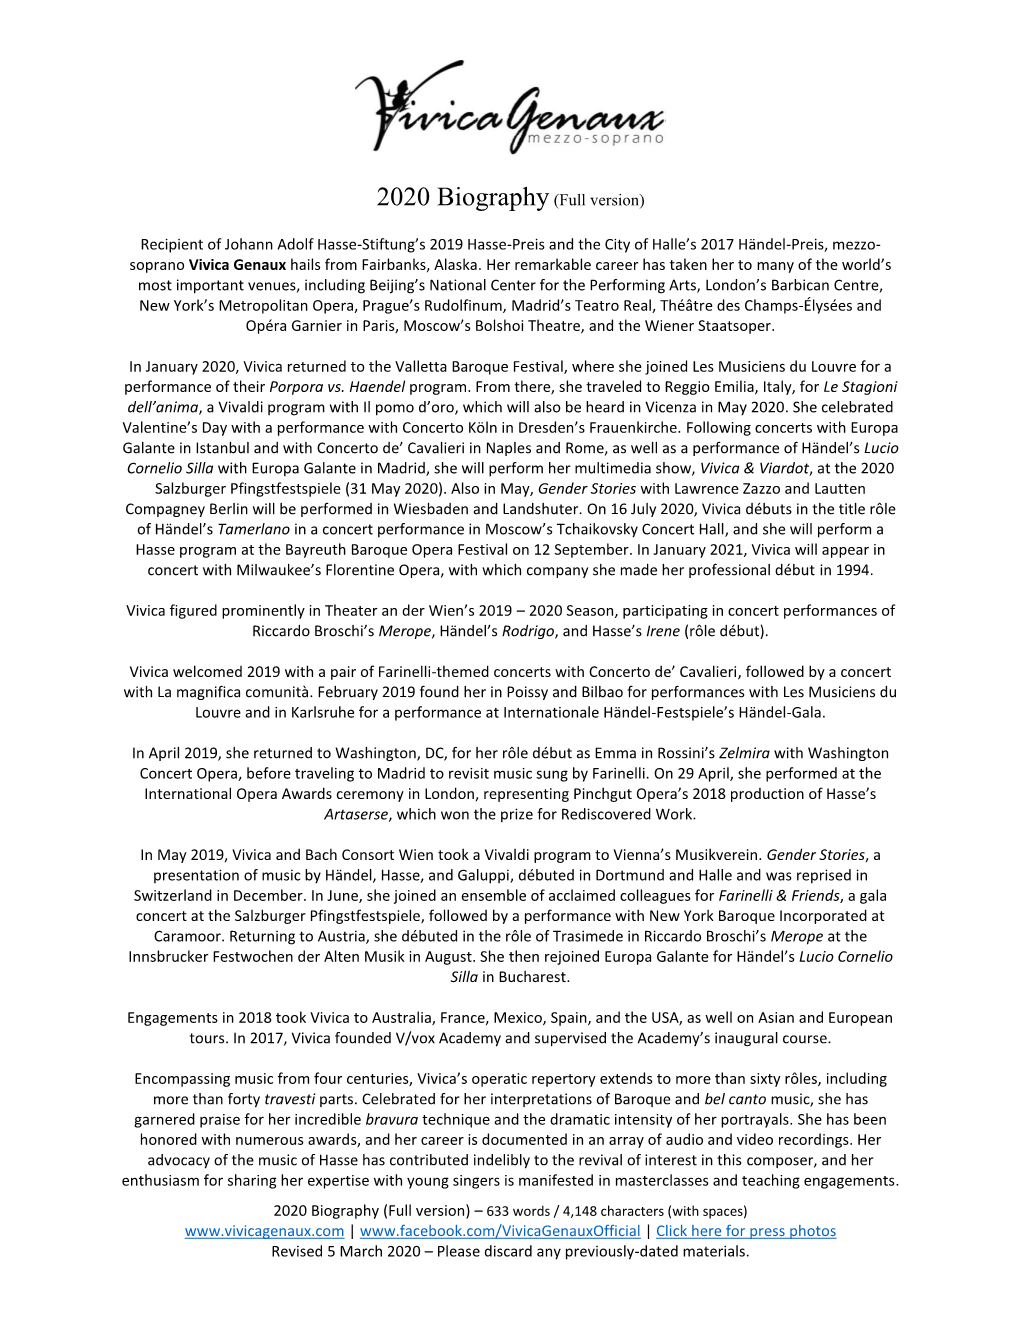 2020 Biography(Full Version)